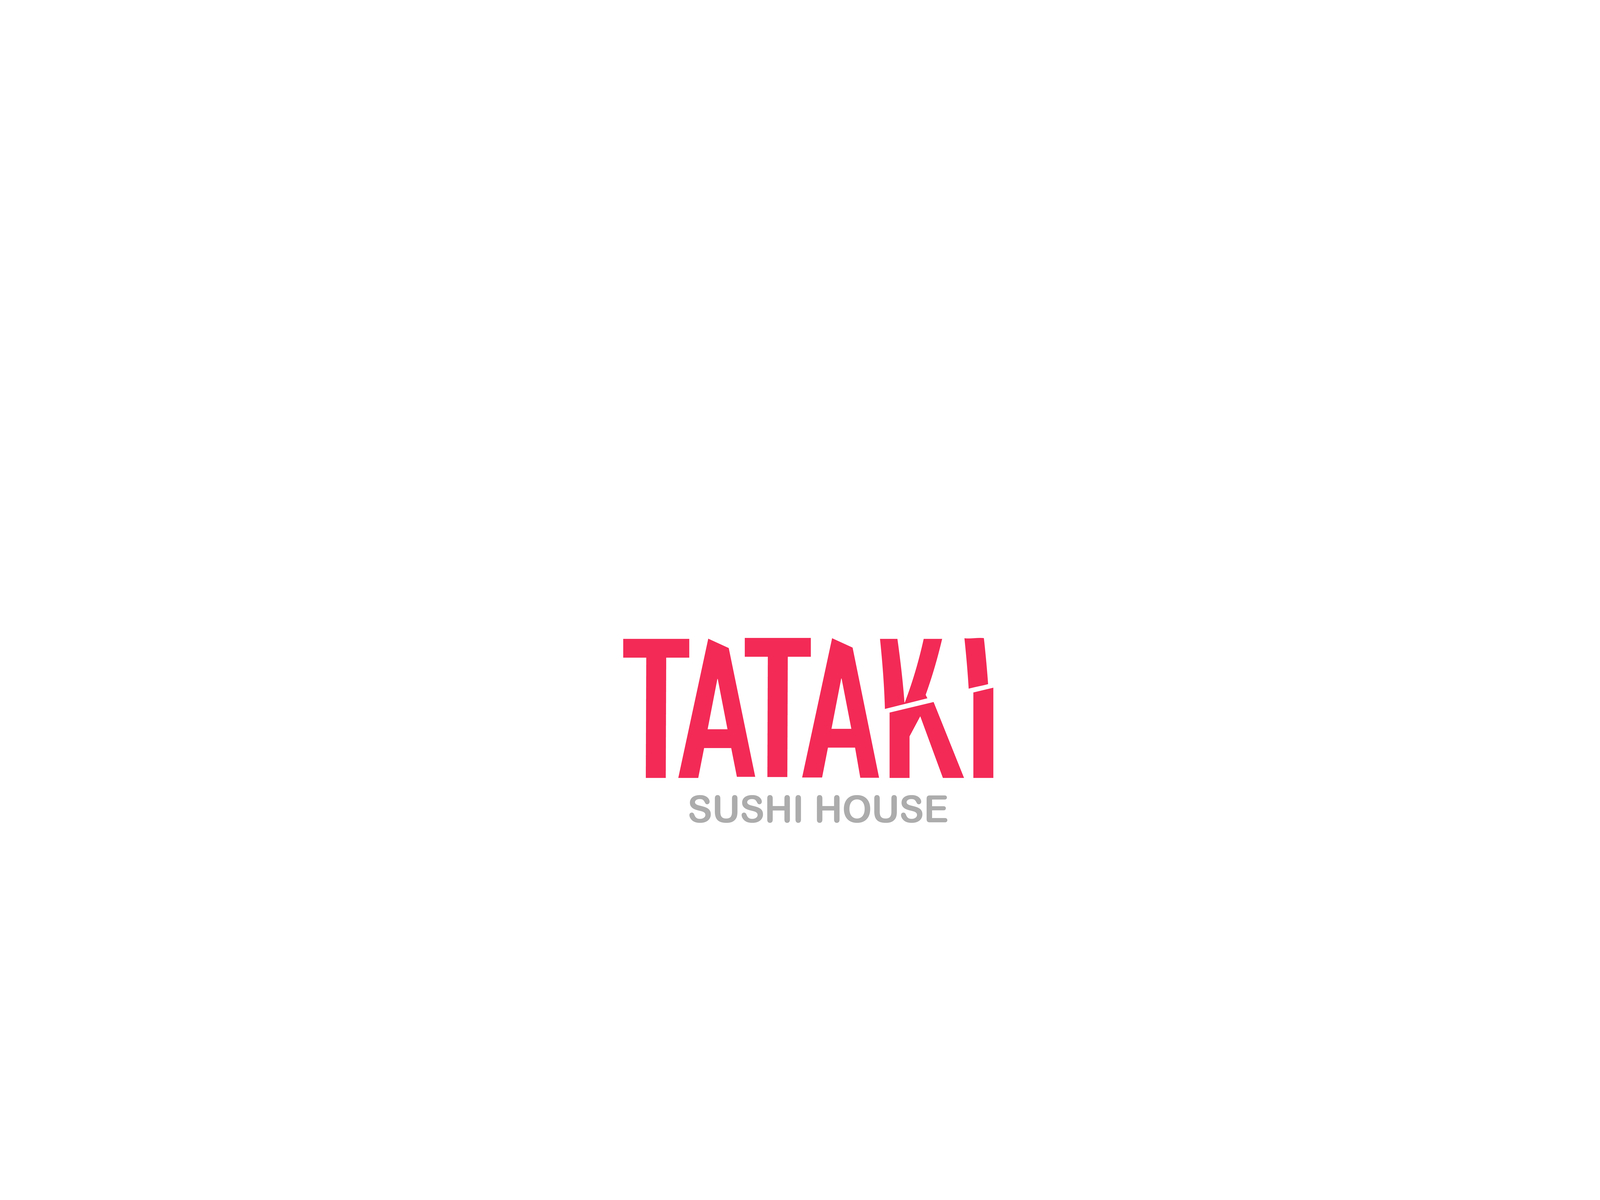 TATAKI - sushi house by SOSOdesign on Dribbble